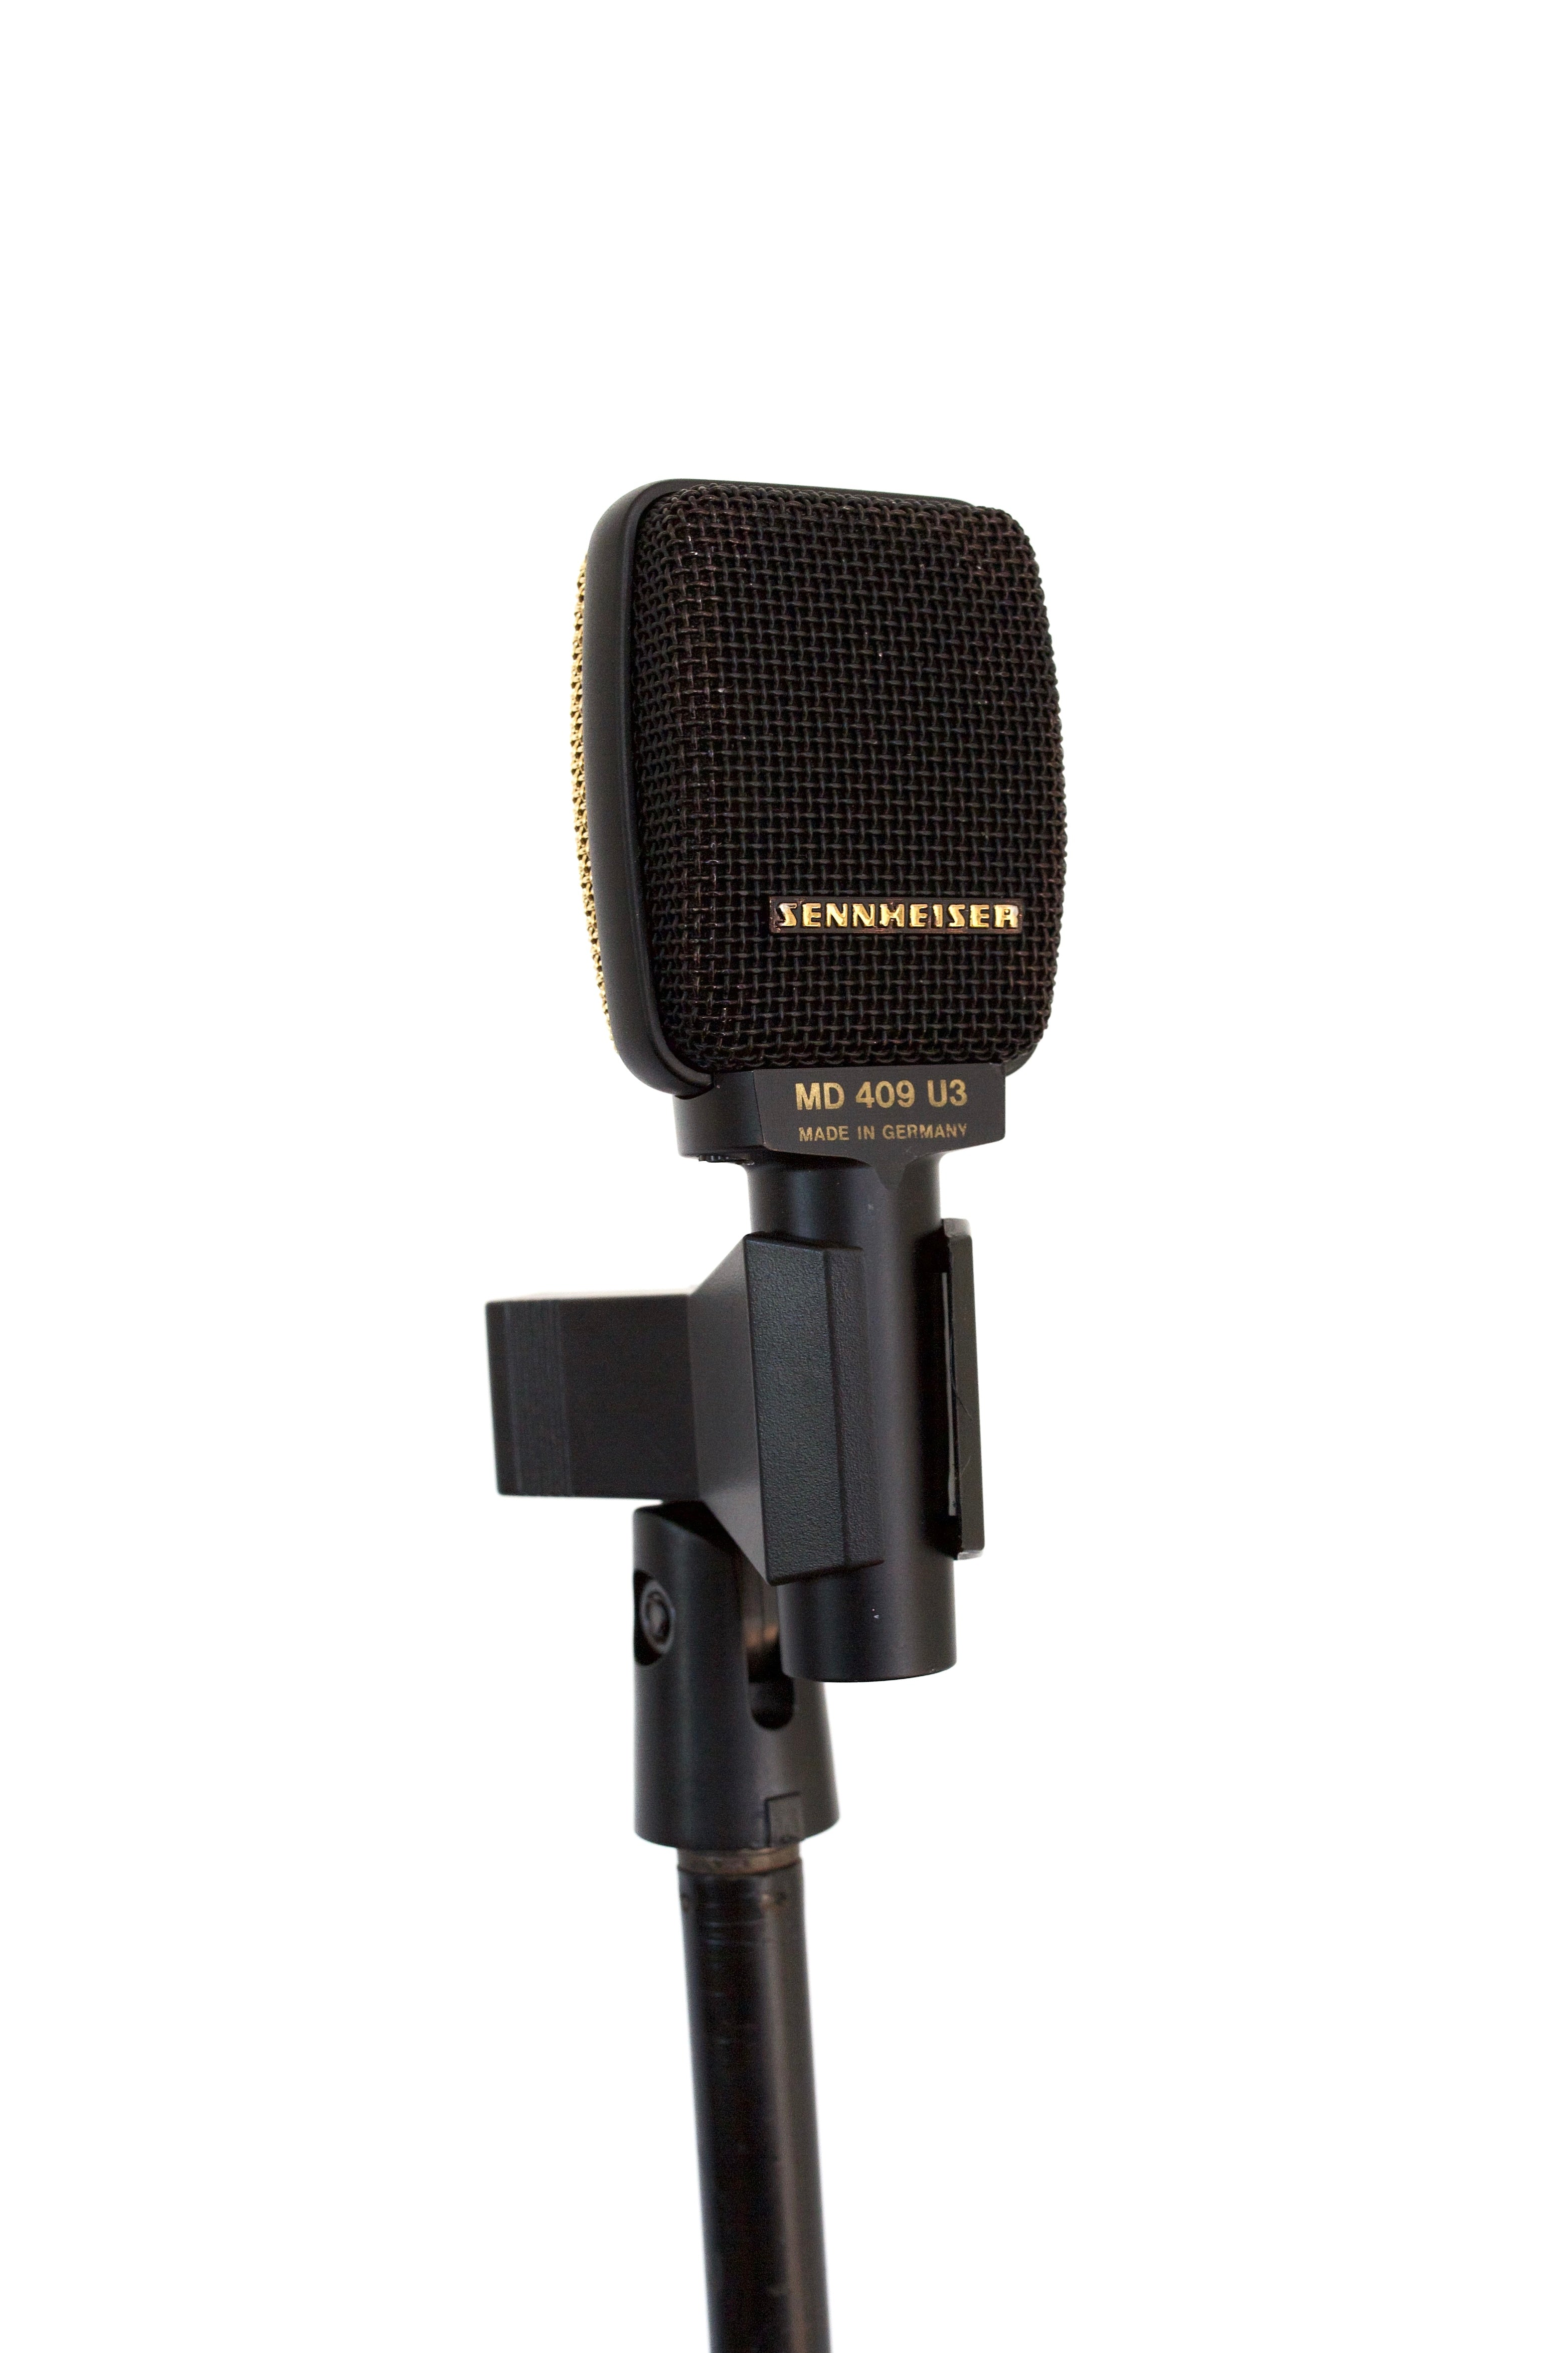 Sennheiser MD409 U3 Dynamic Microphone